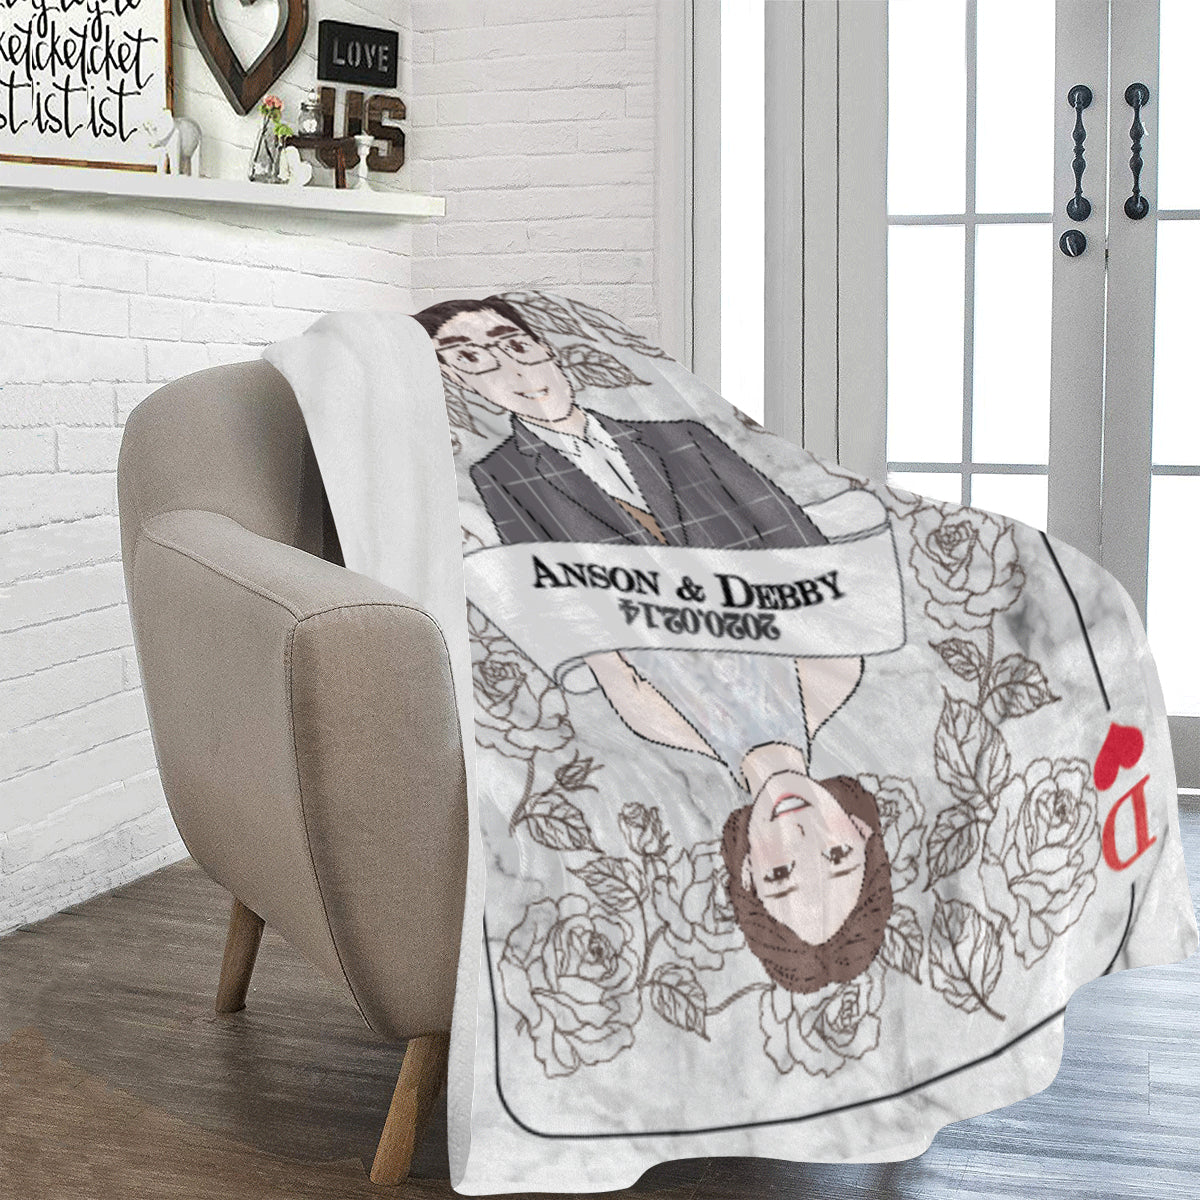 King & Queen 款式客製化插畫毛毯 King & Queen Theme- Custom Blanket with tailor-made illustration. - HKGIFTFORU